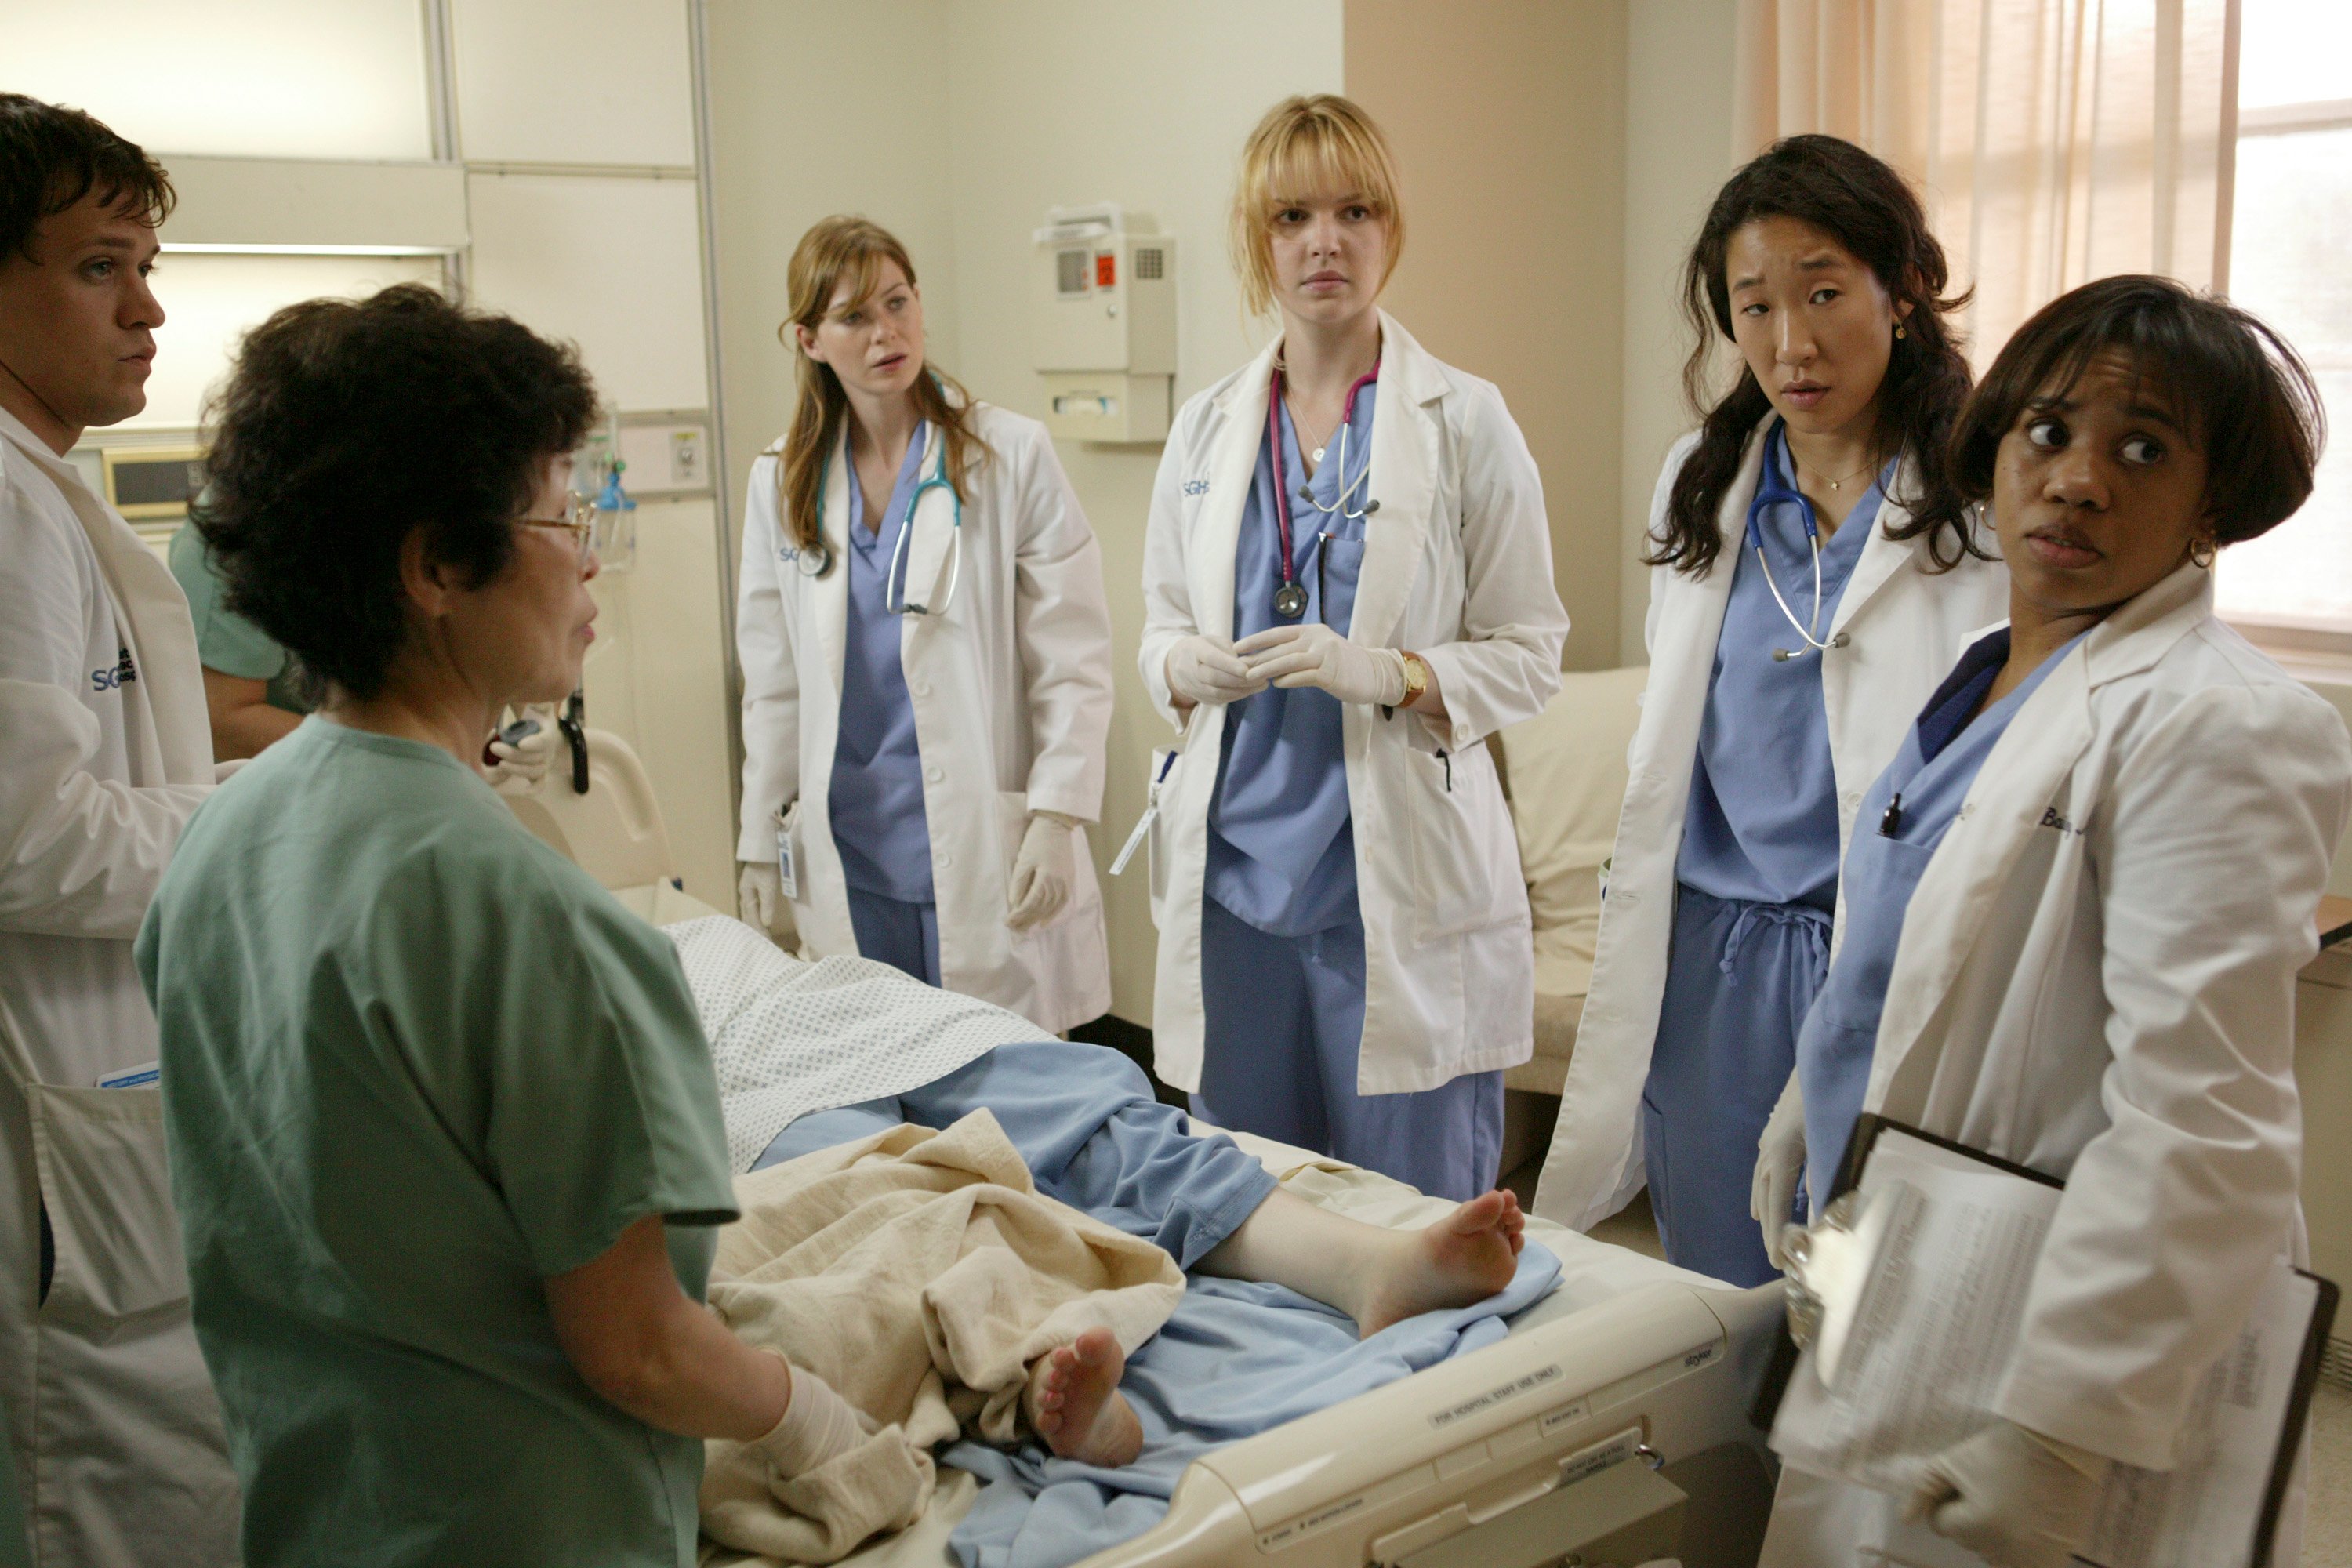 Ellen Pompeo as Meredith Grey, Katherine Heigl as Izzie Stevens, Sandra Oh as Cristina Yang, and Chandra Wilson as Miranda Bailey in the 'Grey's Anatomy' pilot